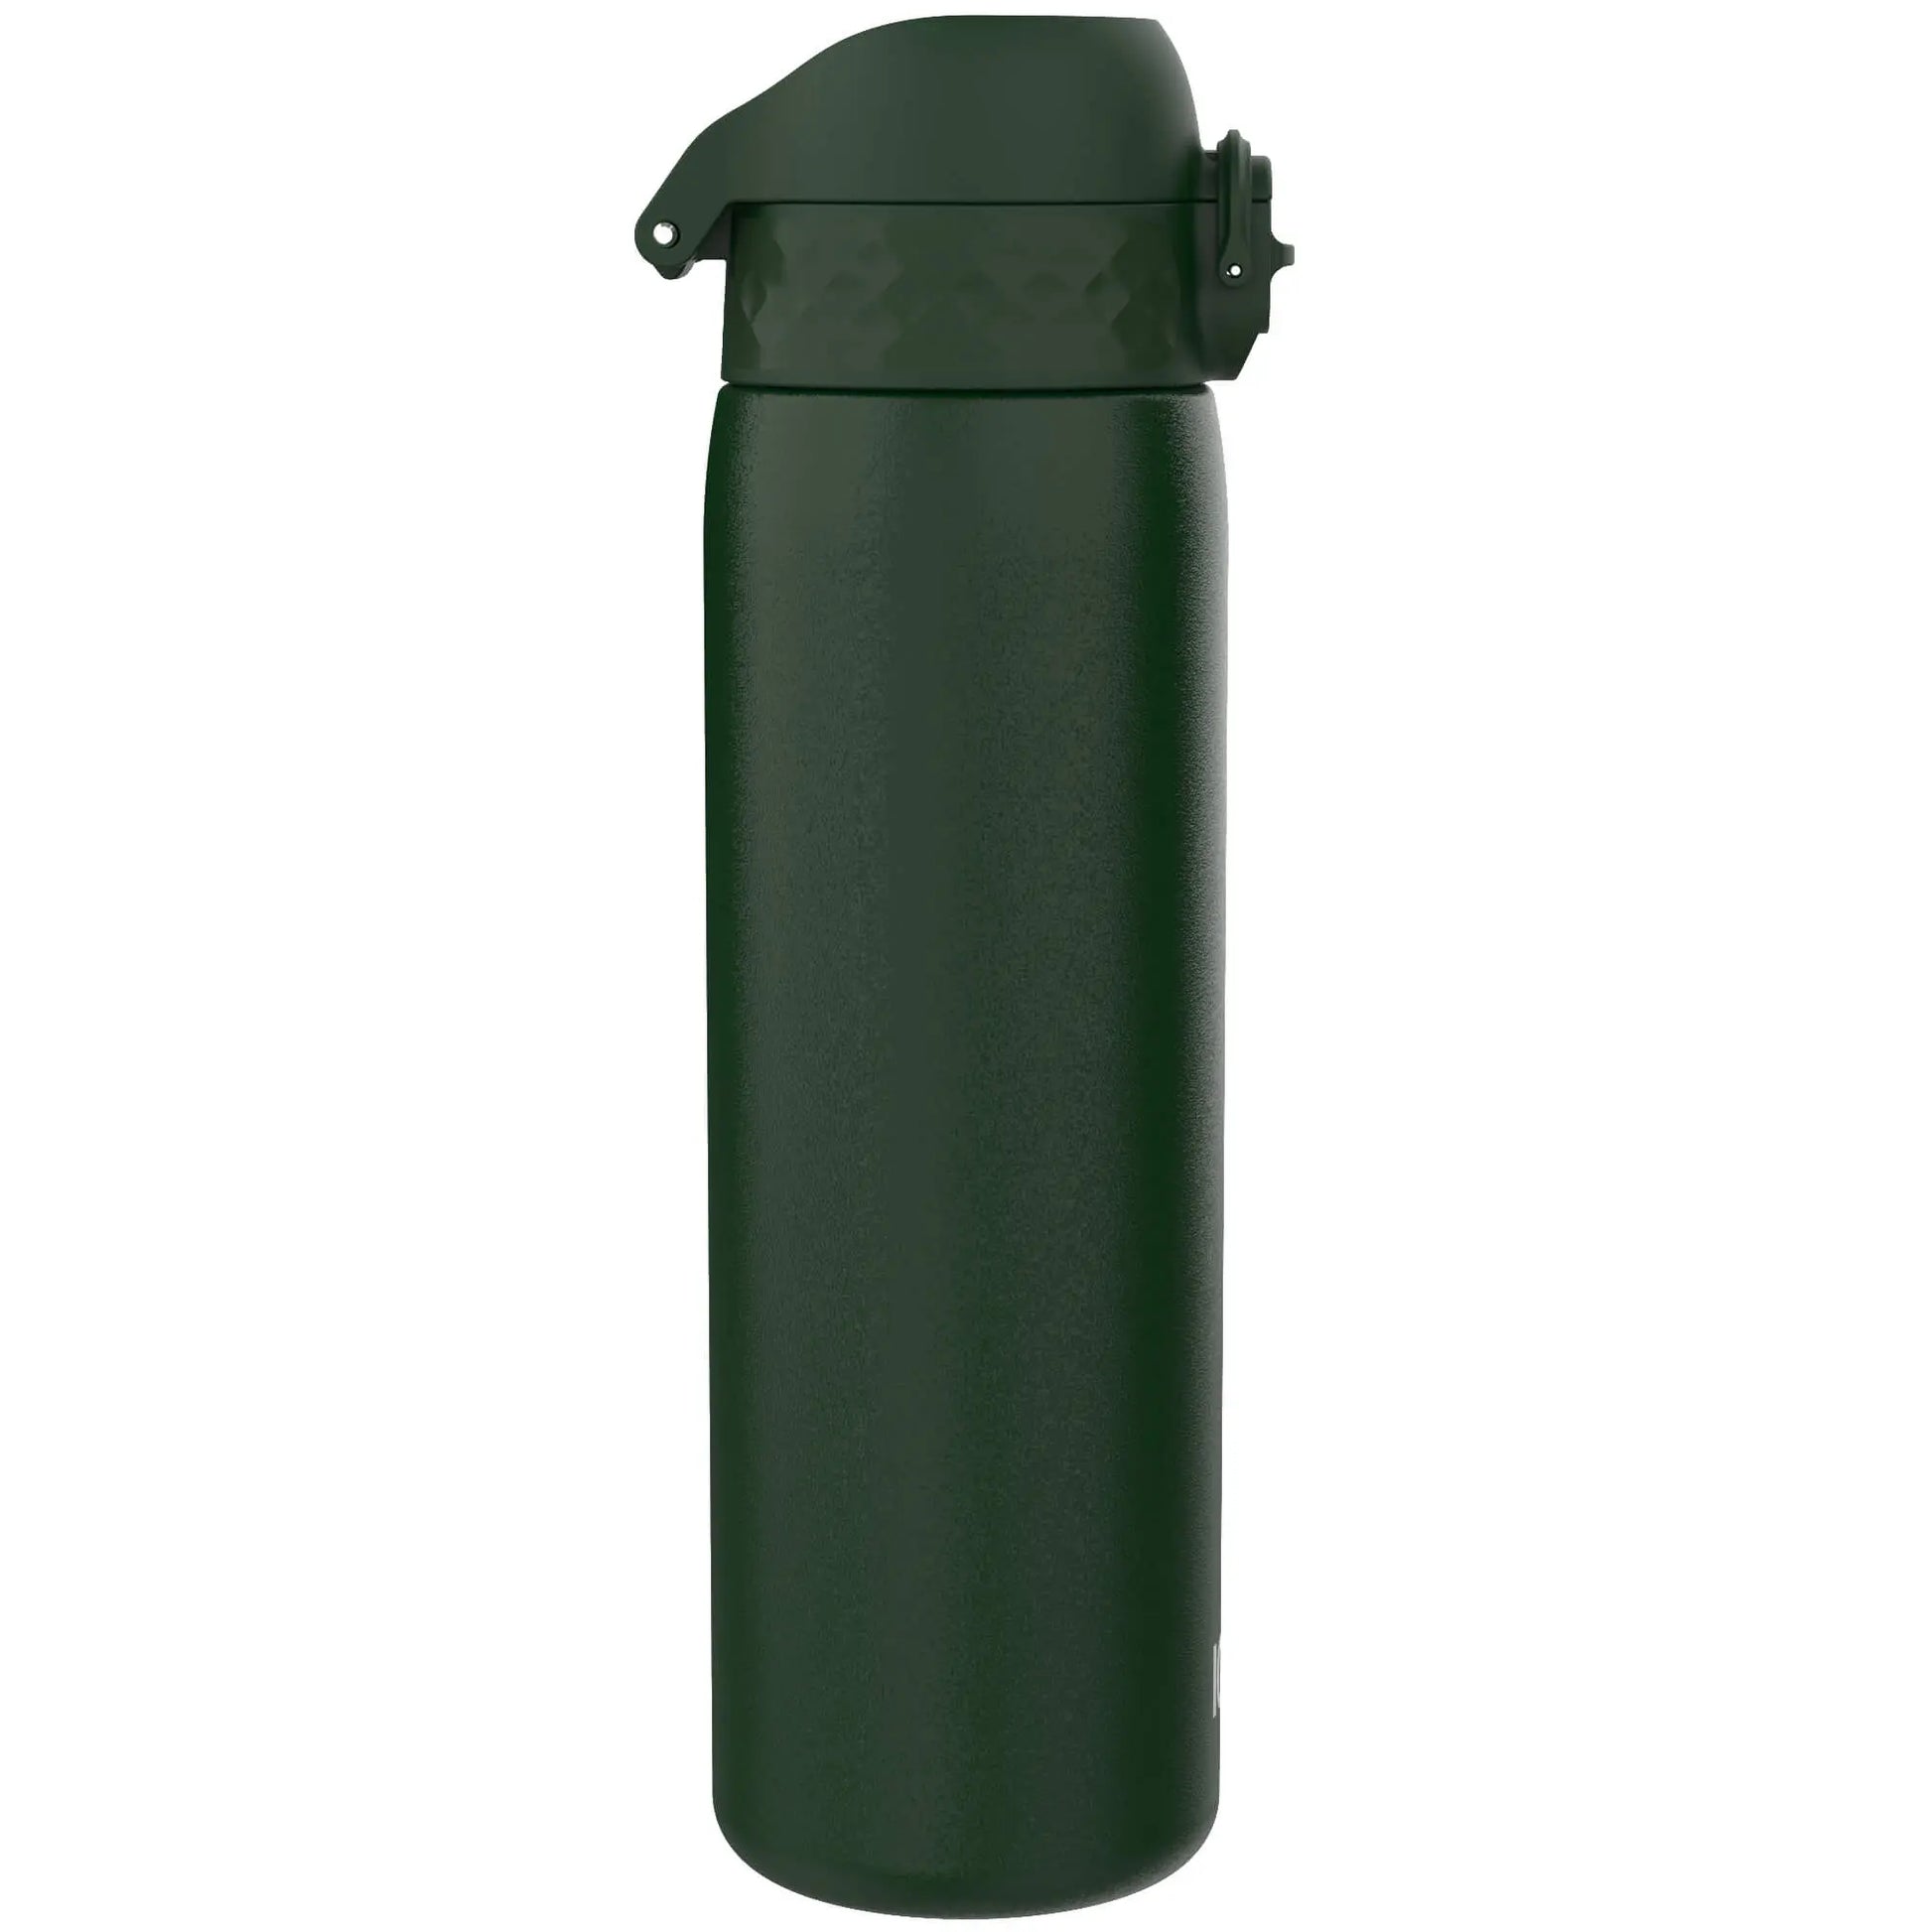 Leak Proof Slim Water Bottle, Stainless Steel, Dark Green, 600ml (20oz) Ion8